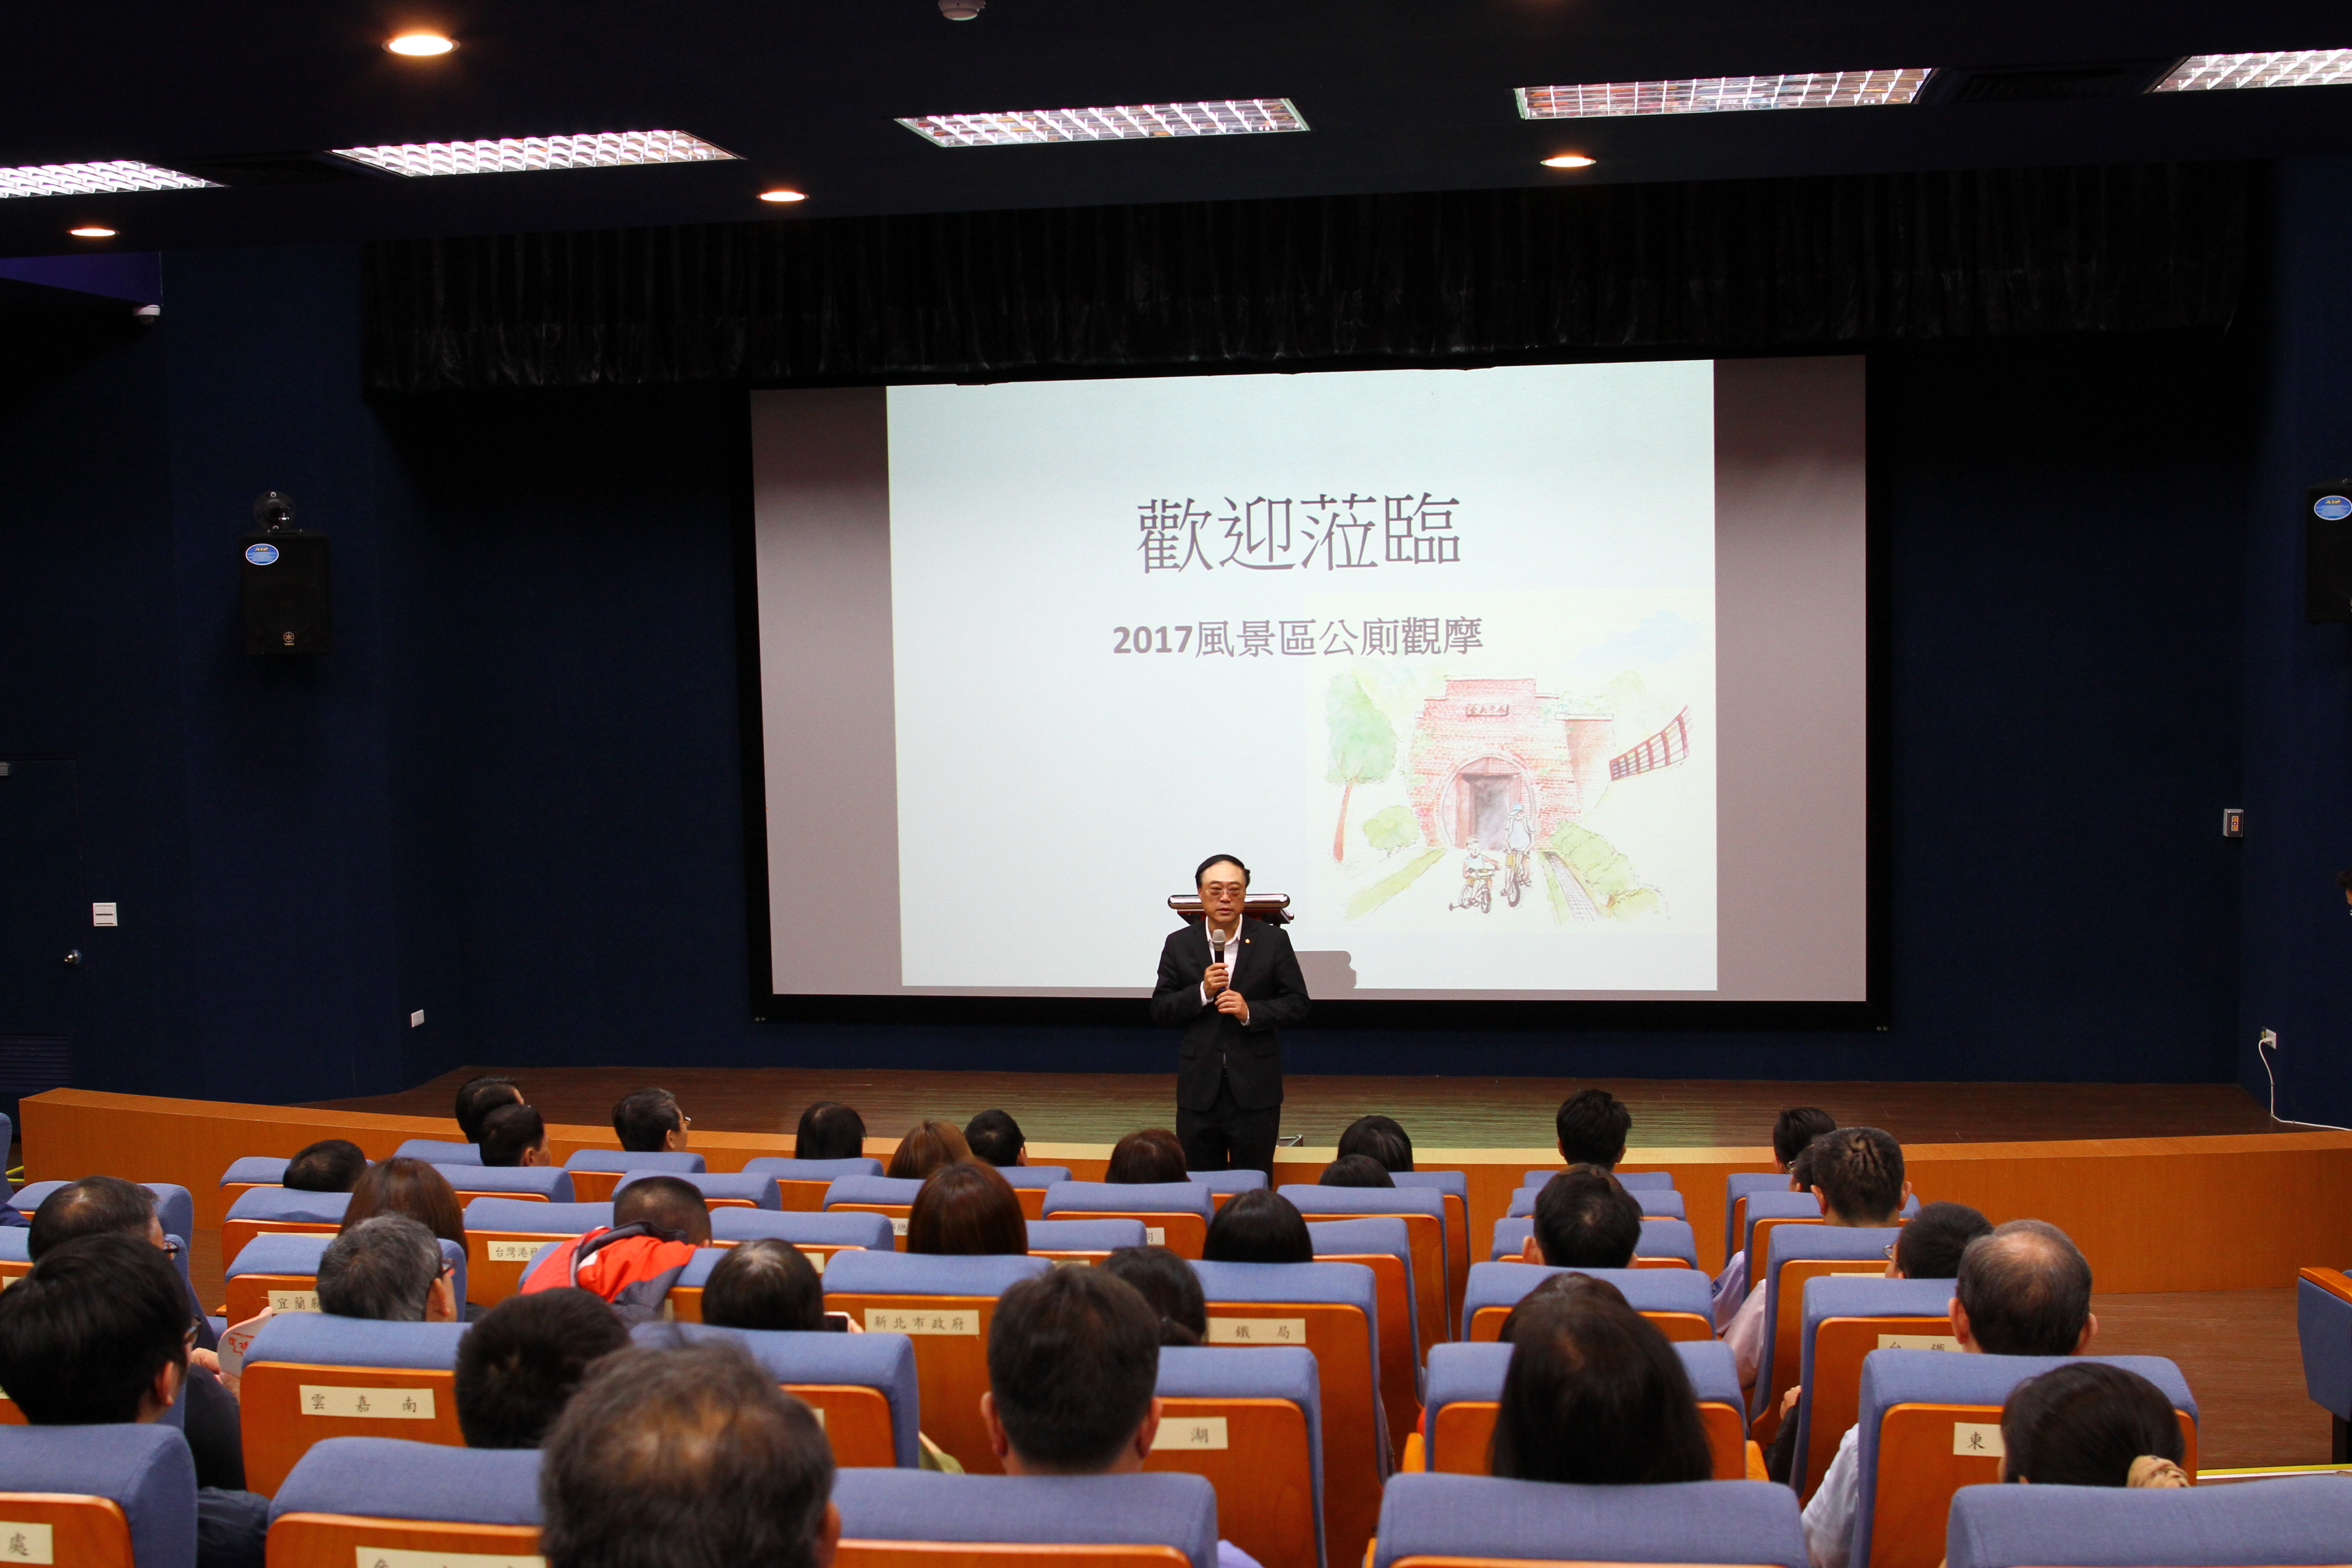 Zhou Yonghui 씨 관광국 국장은 6S 개념으로 공중 화장실을 관리 할 것을 관리 사무소에 장려했습니다.